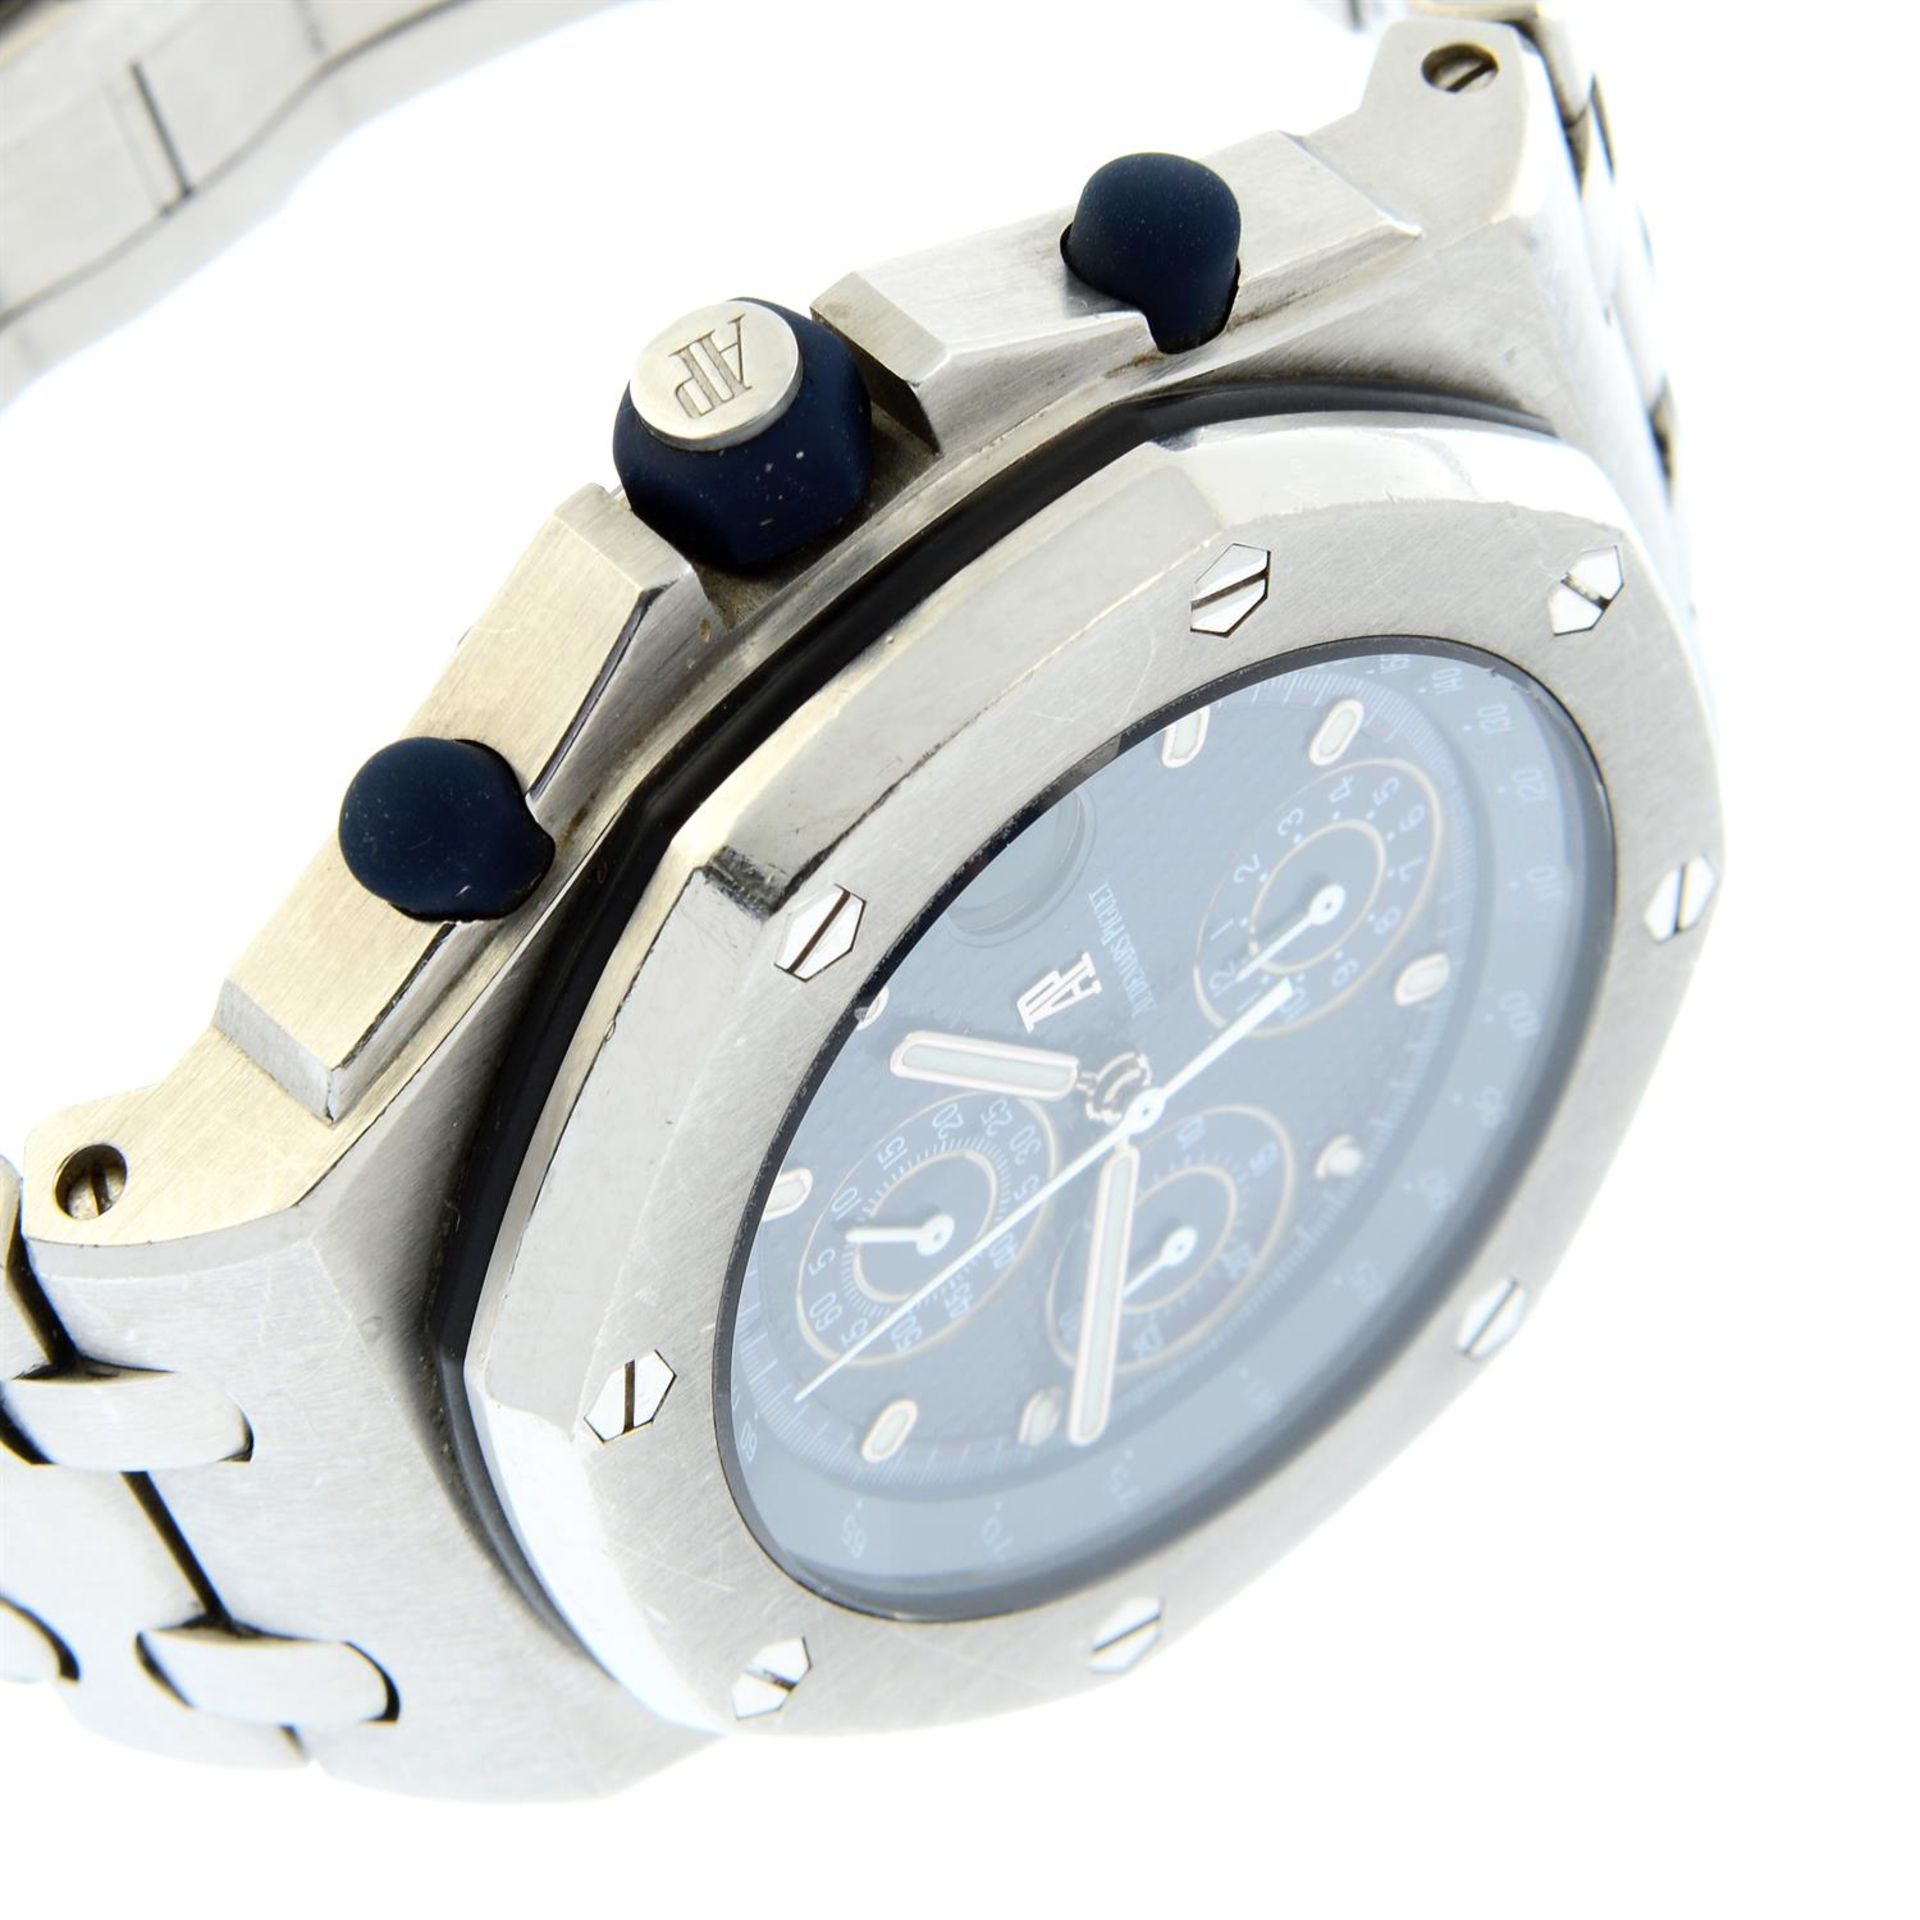 AUDEMARS PIGUET - a stainless steel Royal Oak Offshore chronograph bracelet watch, 42mm. - Image 3 of 6